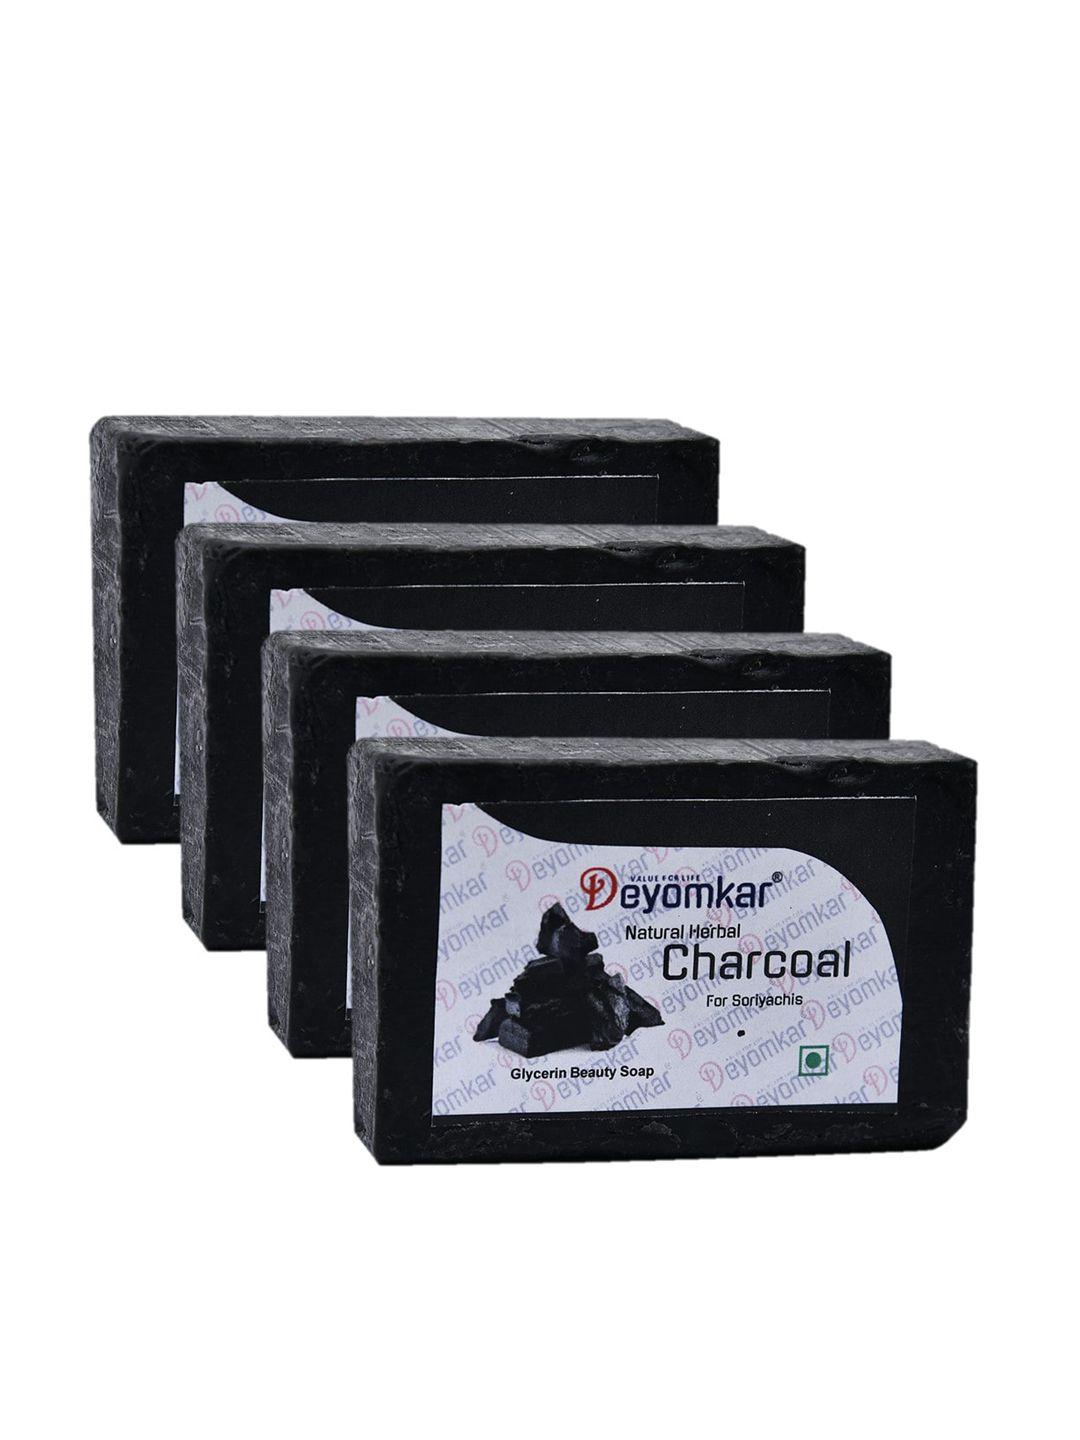 deyomkar pack of 4 natural herbal glycerin charcoal soaps